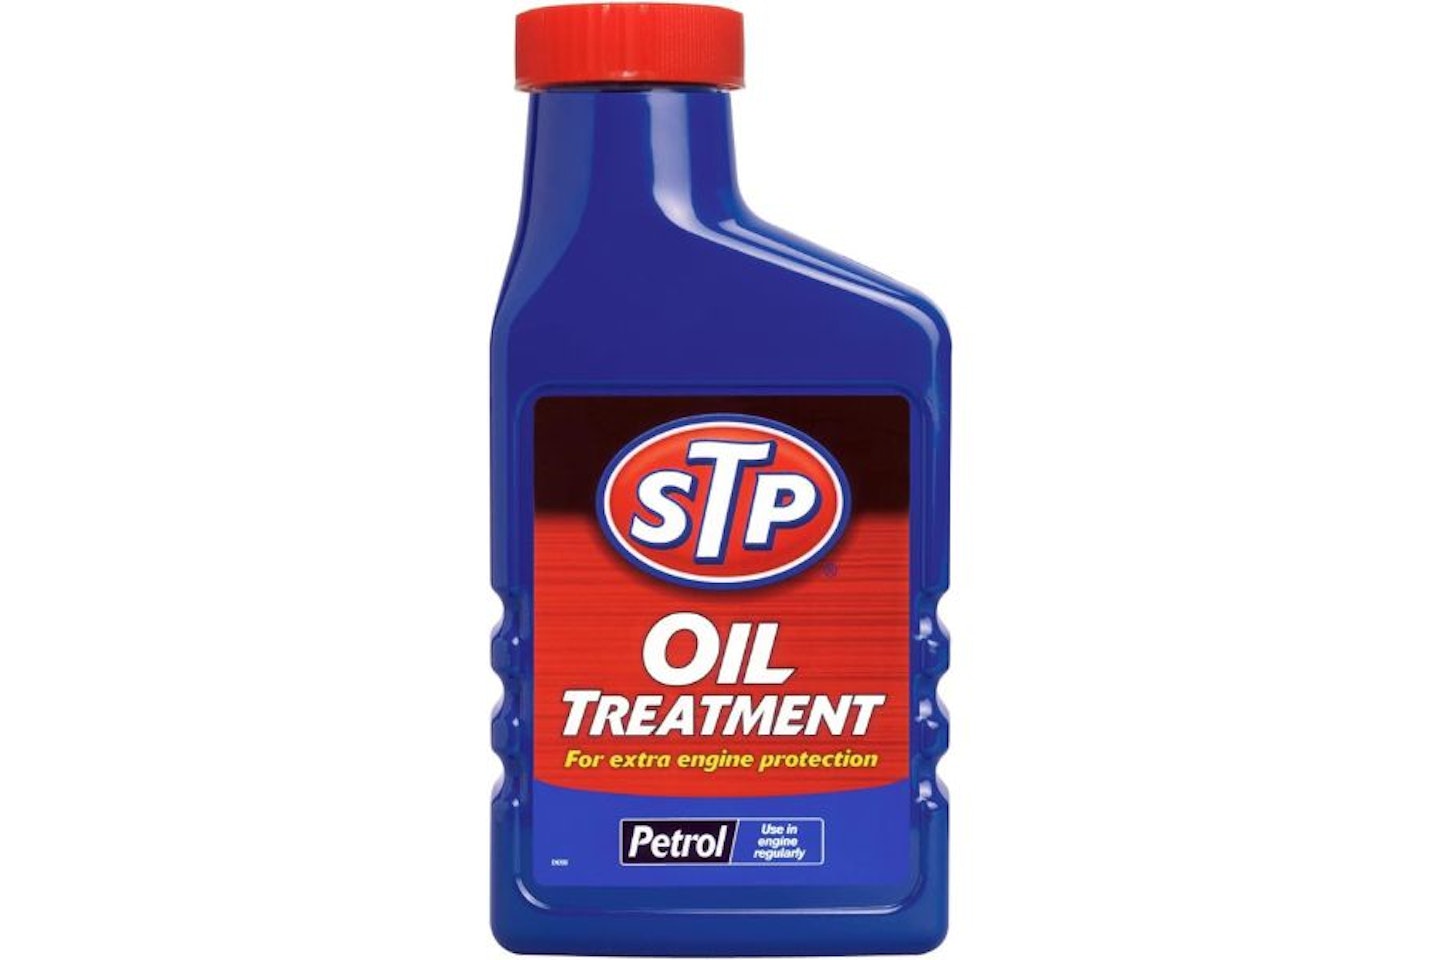 STP Oil Treatment, 450ml